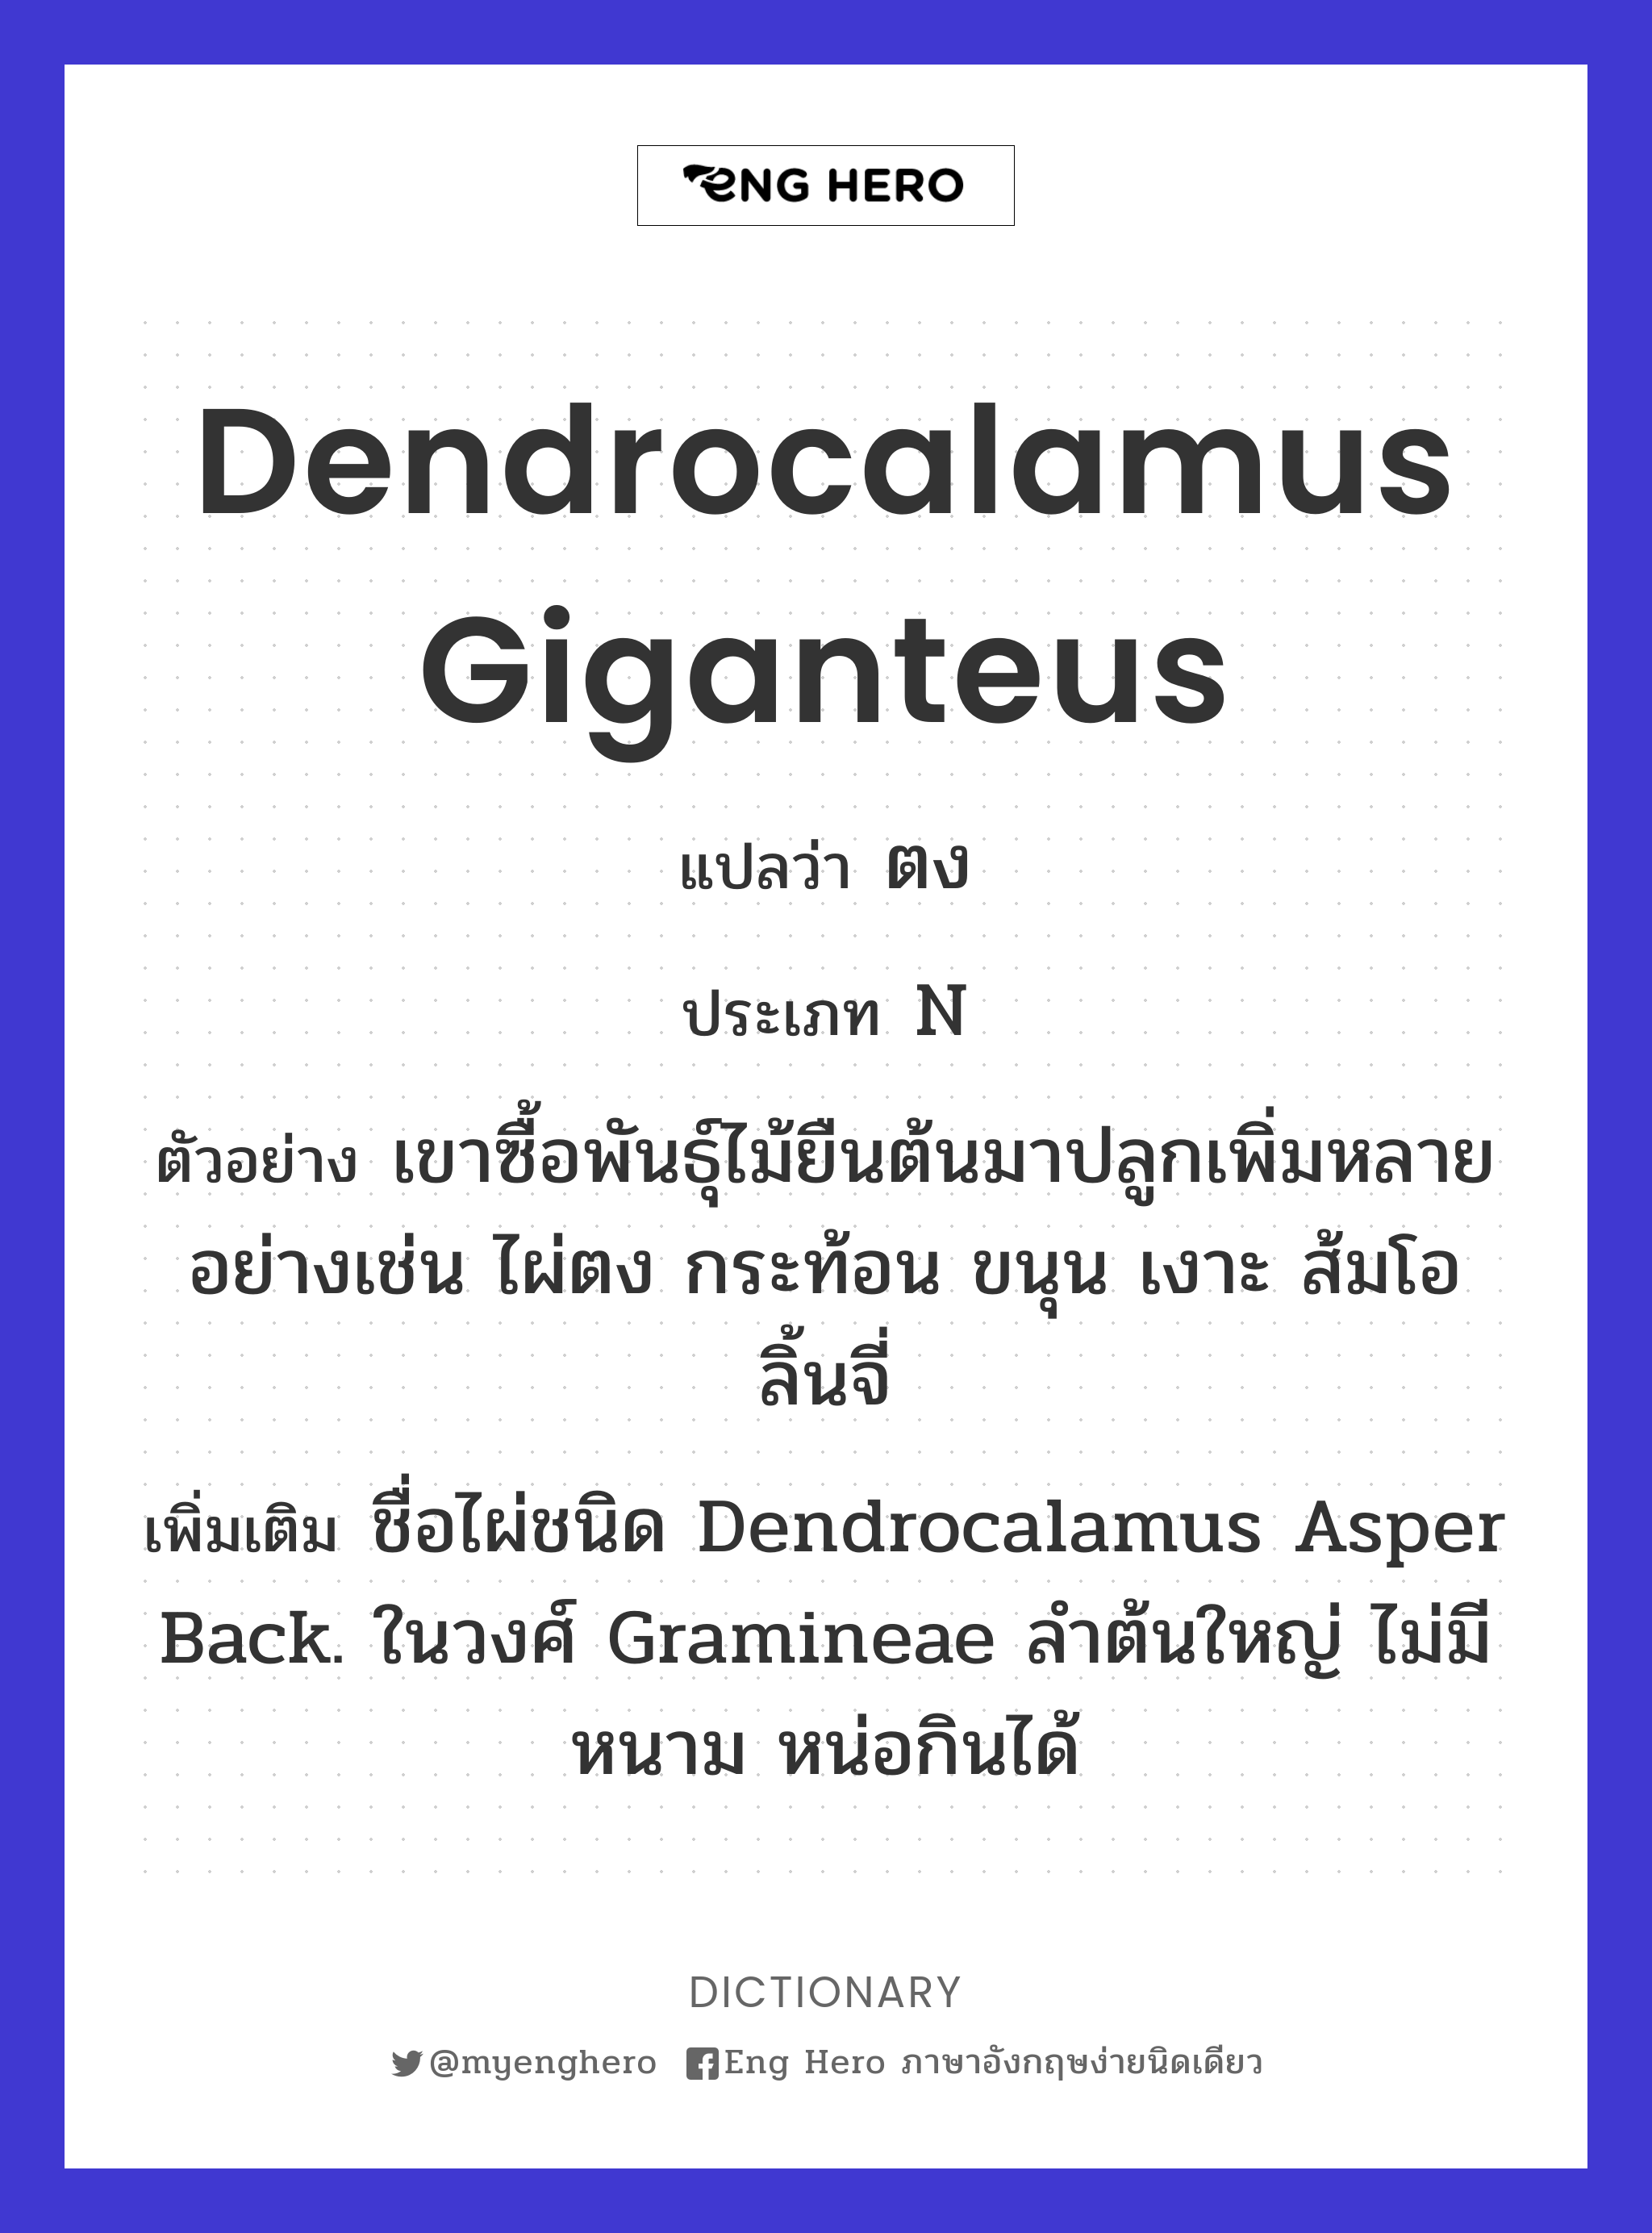 Dendrocalamus giganteus